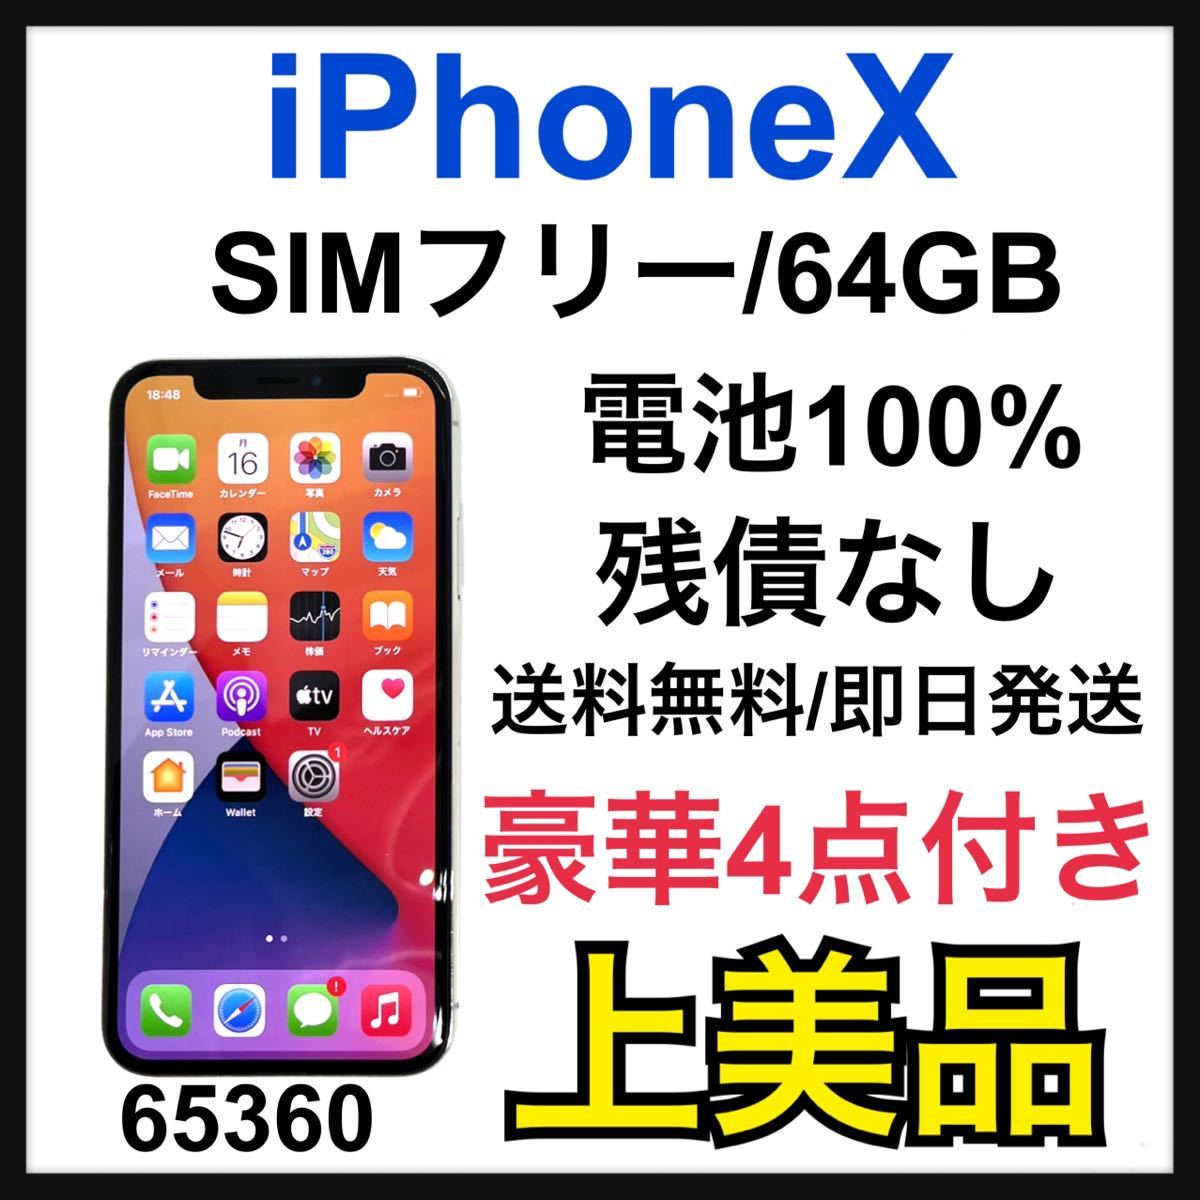 iPhone X SIMフリー 64GB iPhoneX シルバー 完動品